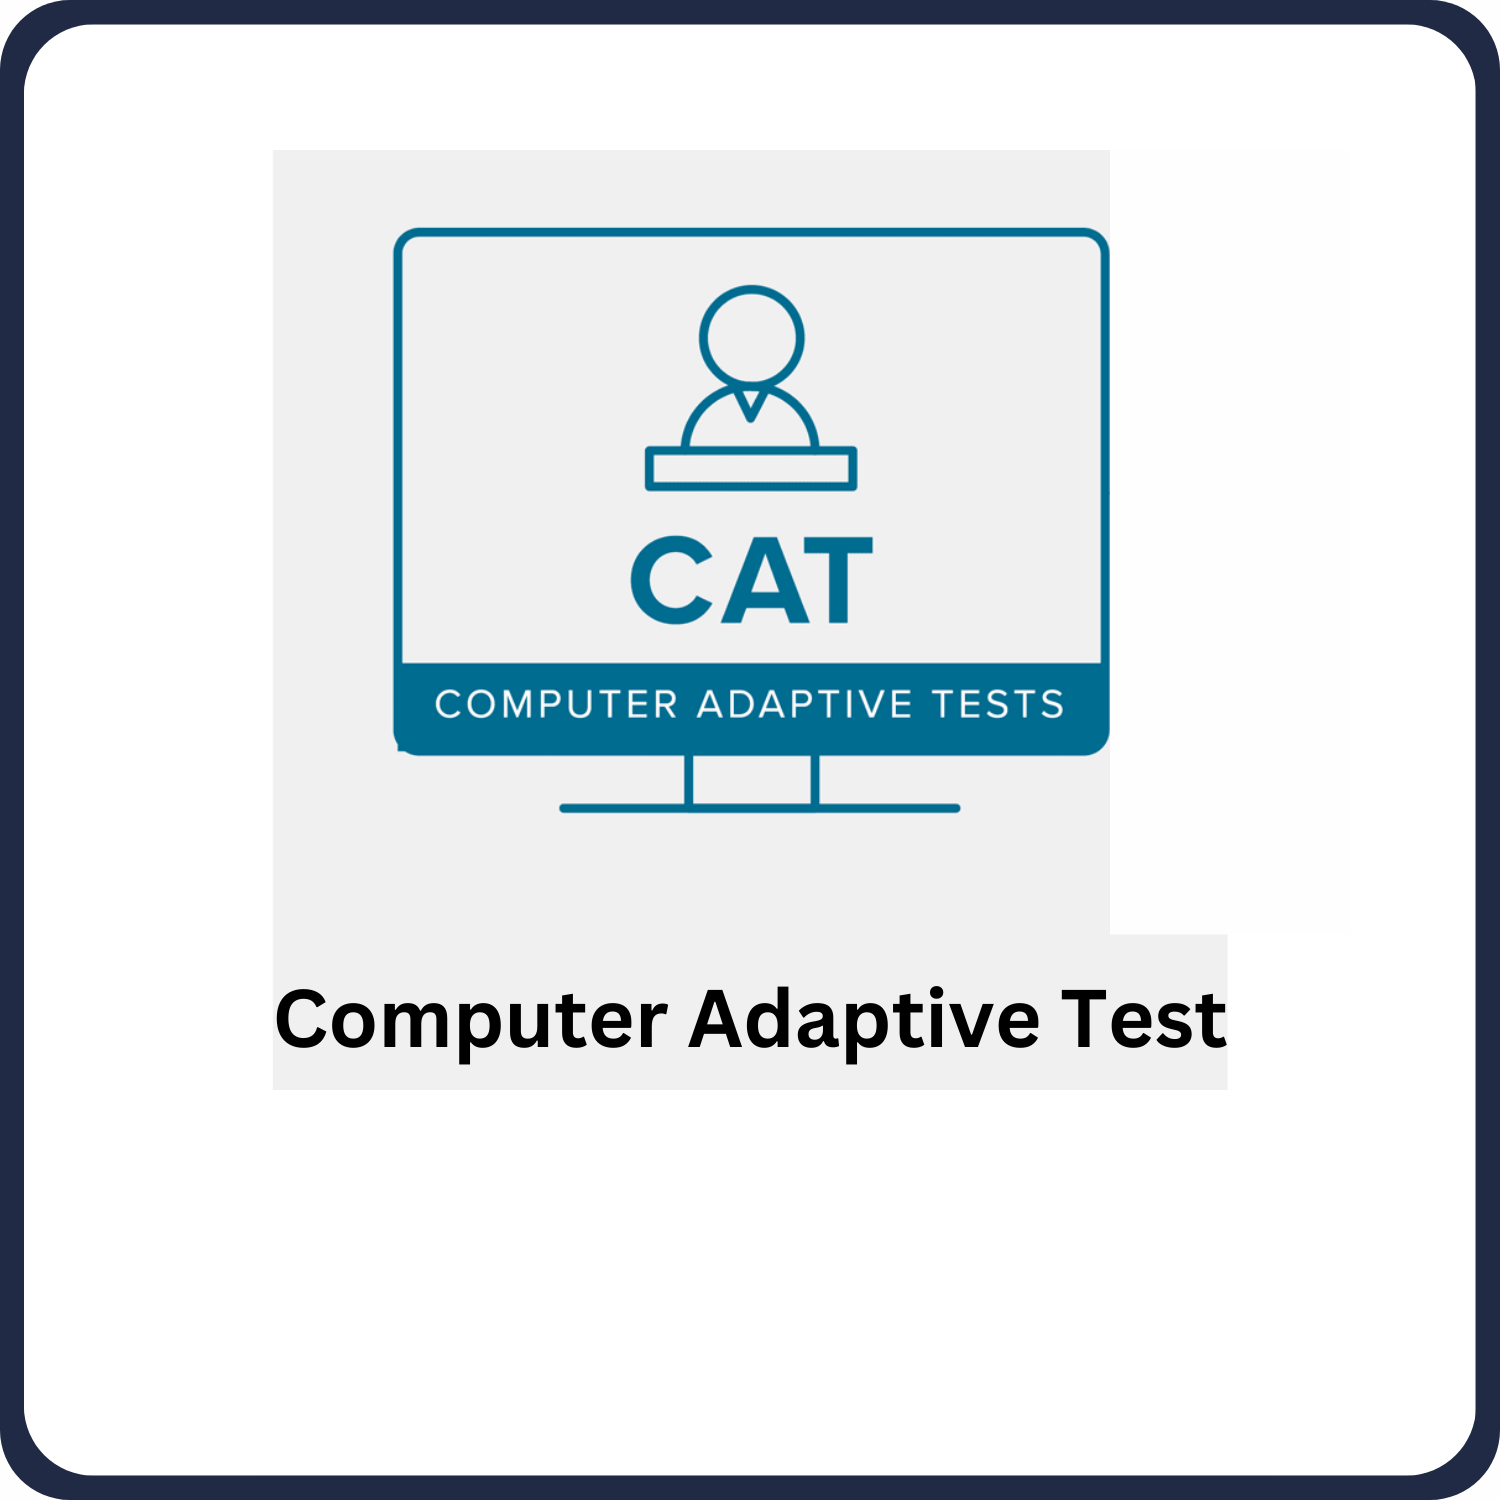 Computer Adaptive Tests